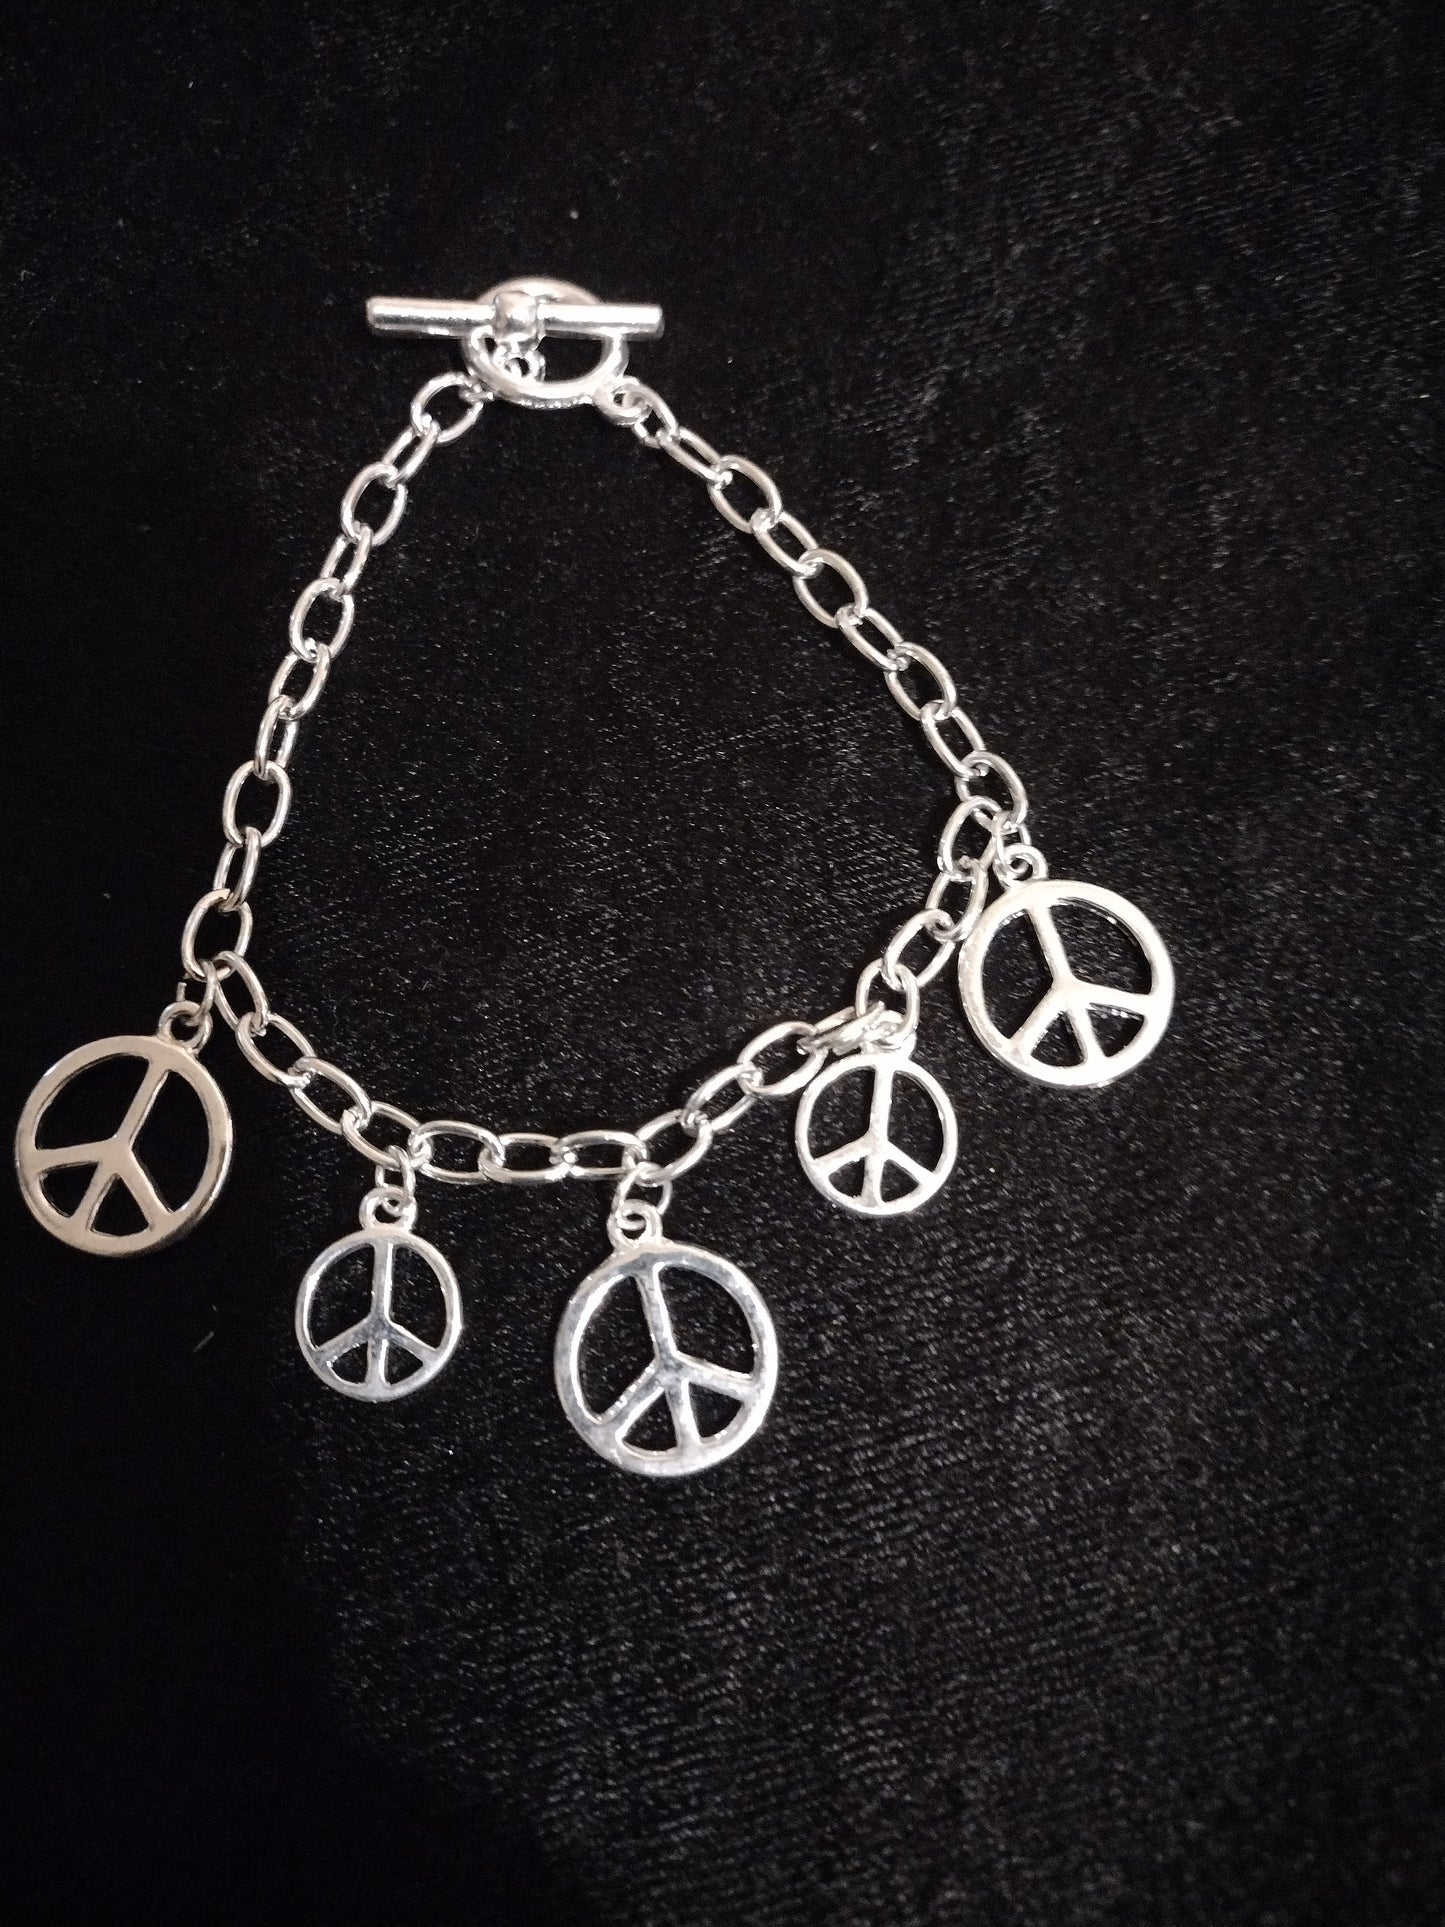 Peace charm bracelet